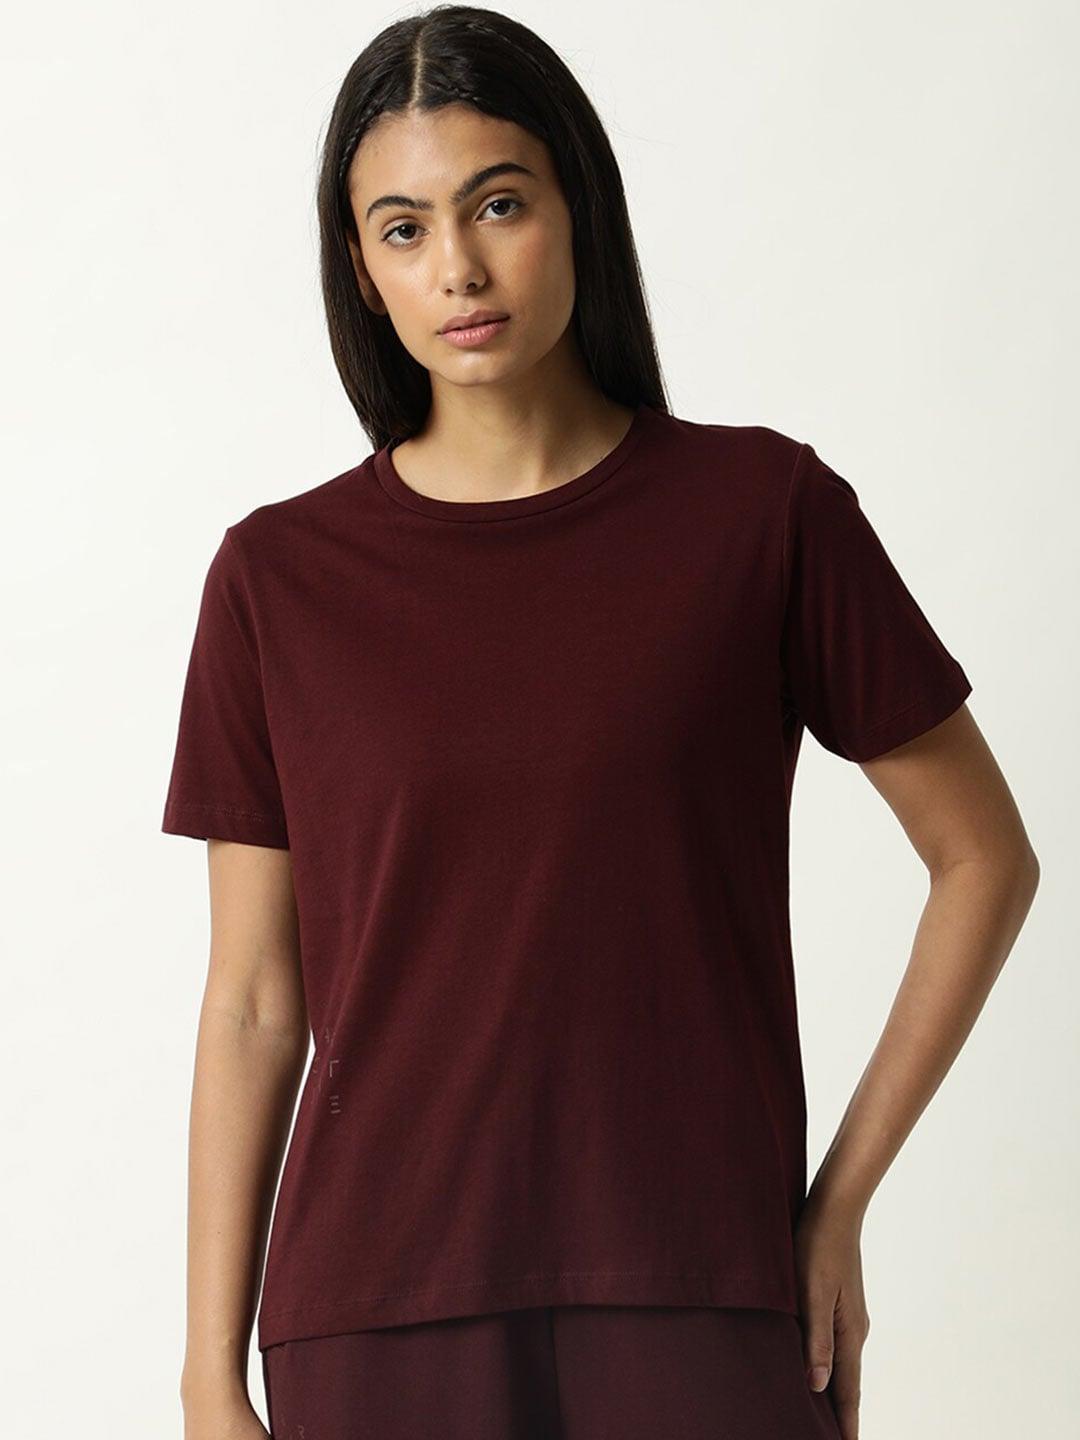 articale women maroon solid slim fit cotton t-shirt